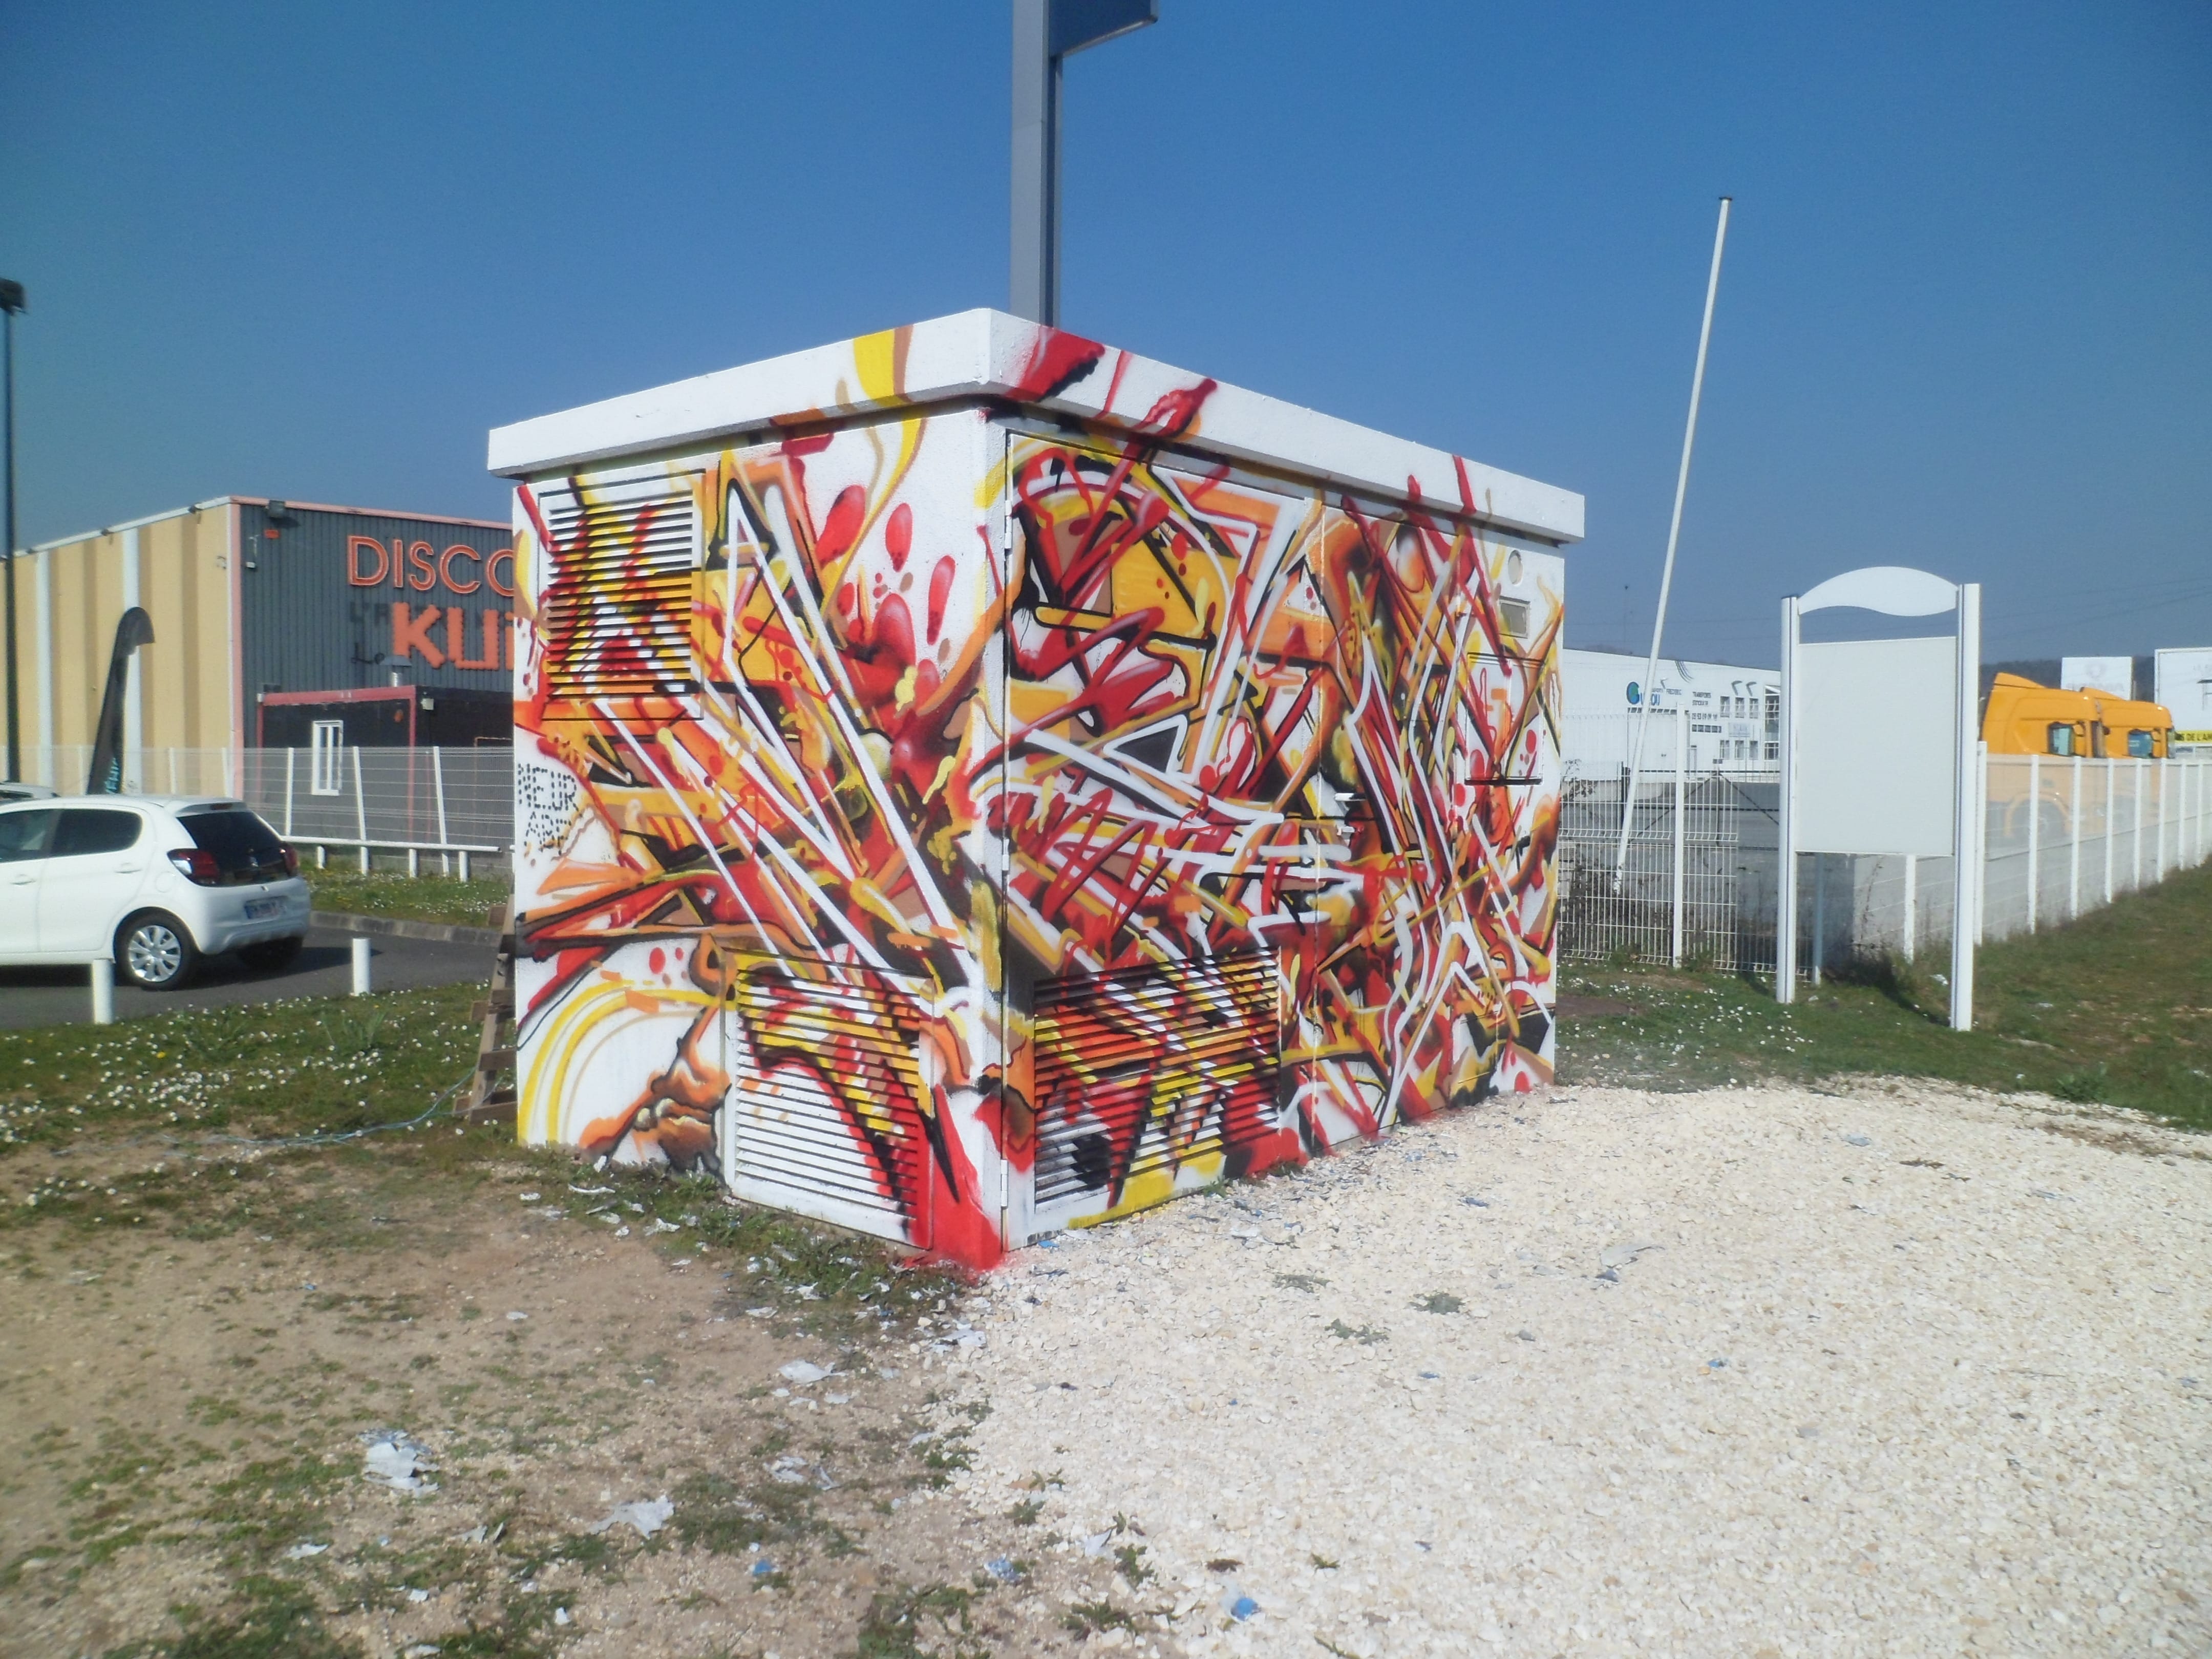 Graffiti 5665 #neurabf captured by Neur Abf in Trélissac France